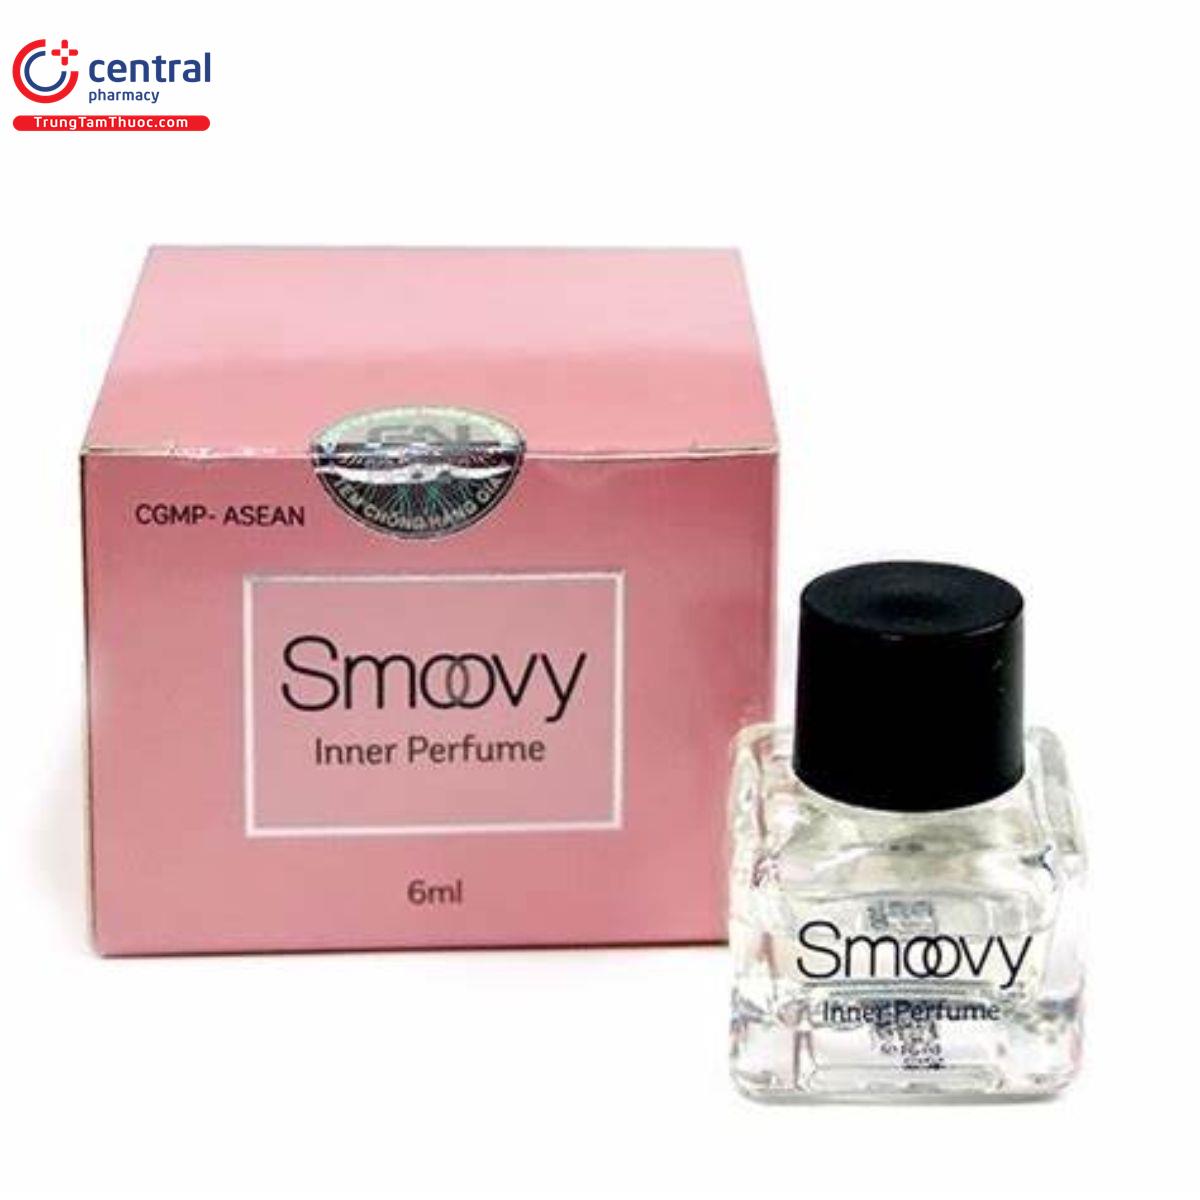 smoovy inner perfume 2 I3303